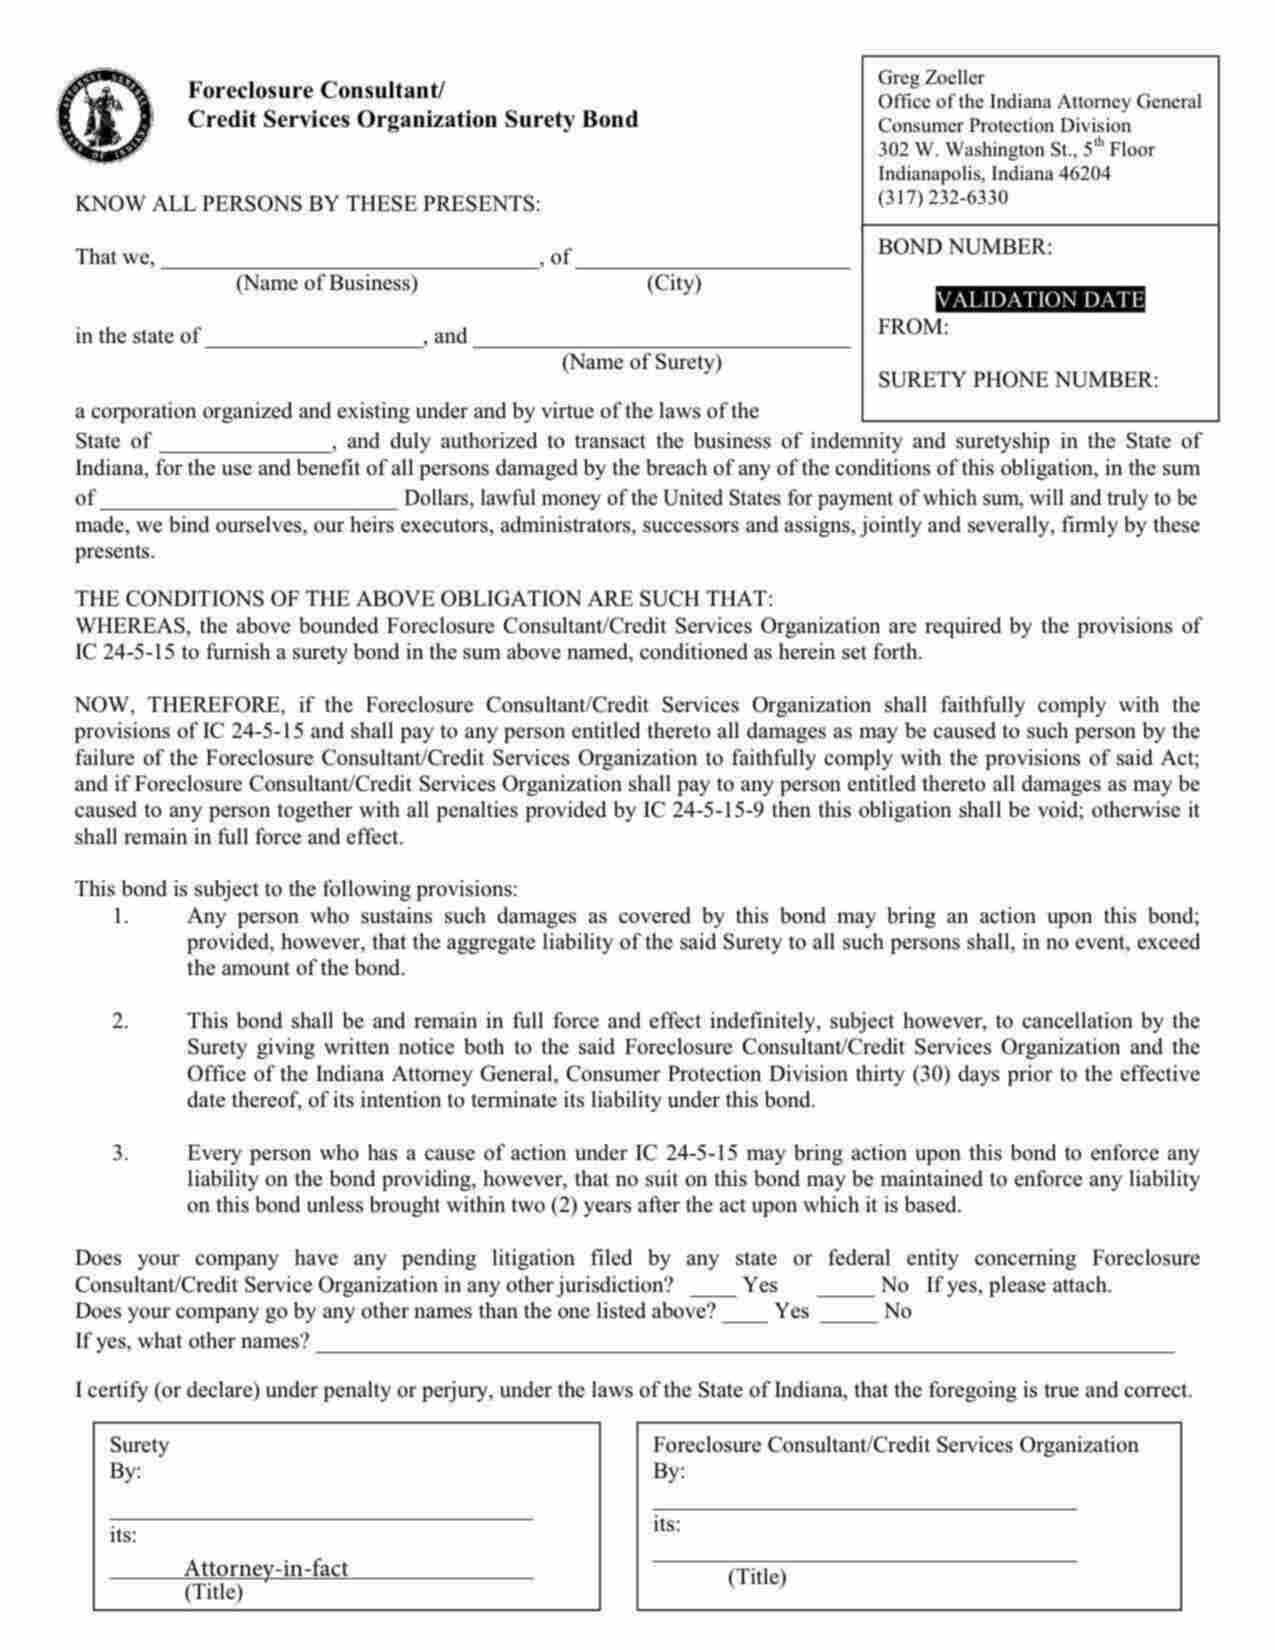 Indiana Foreclosure Consultant/Credit Service Organization Bond Form